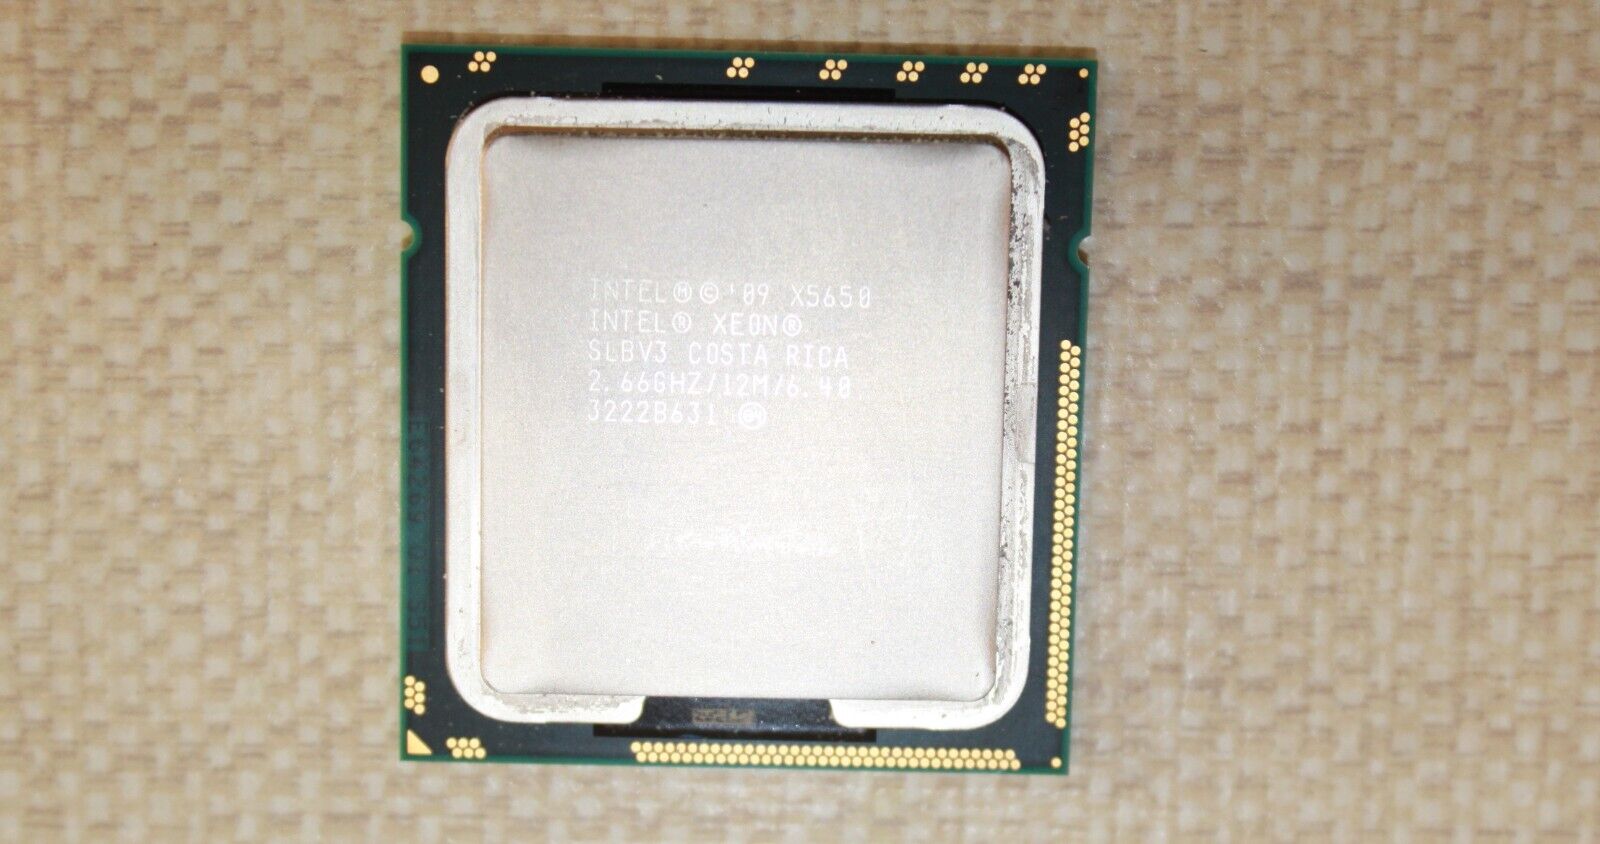 Intel Xeon X5650 2.66 GHz 6 Cores (SLBV3) CPU Processor